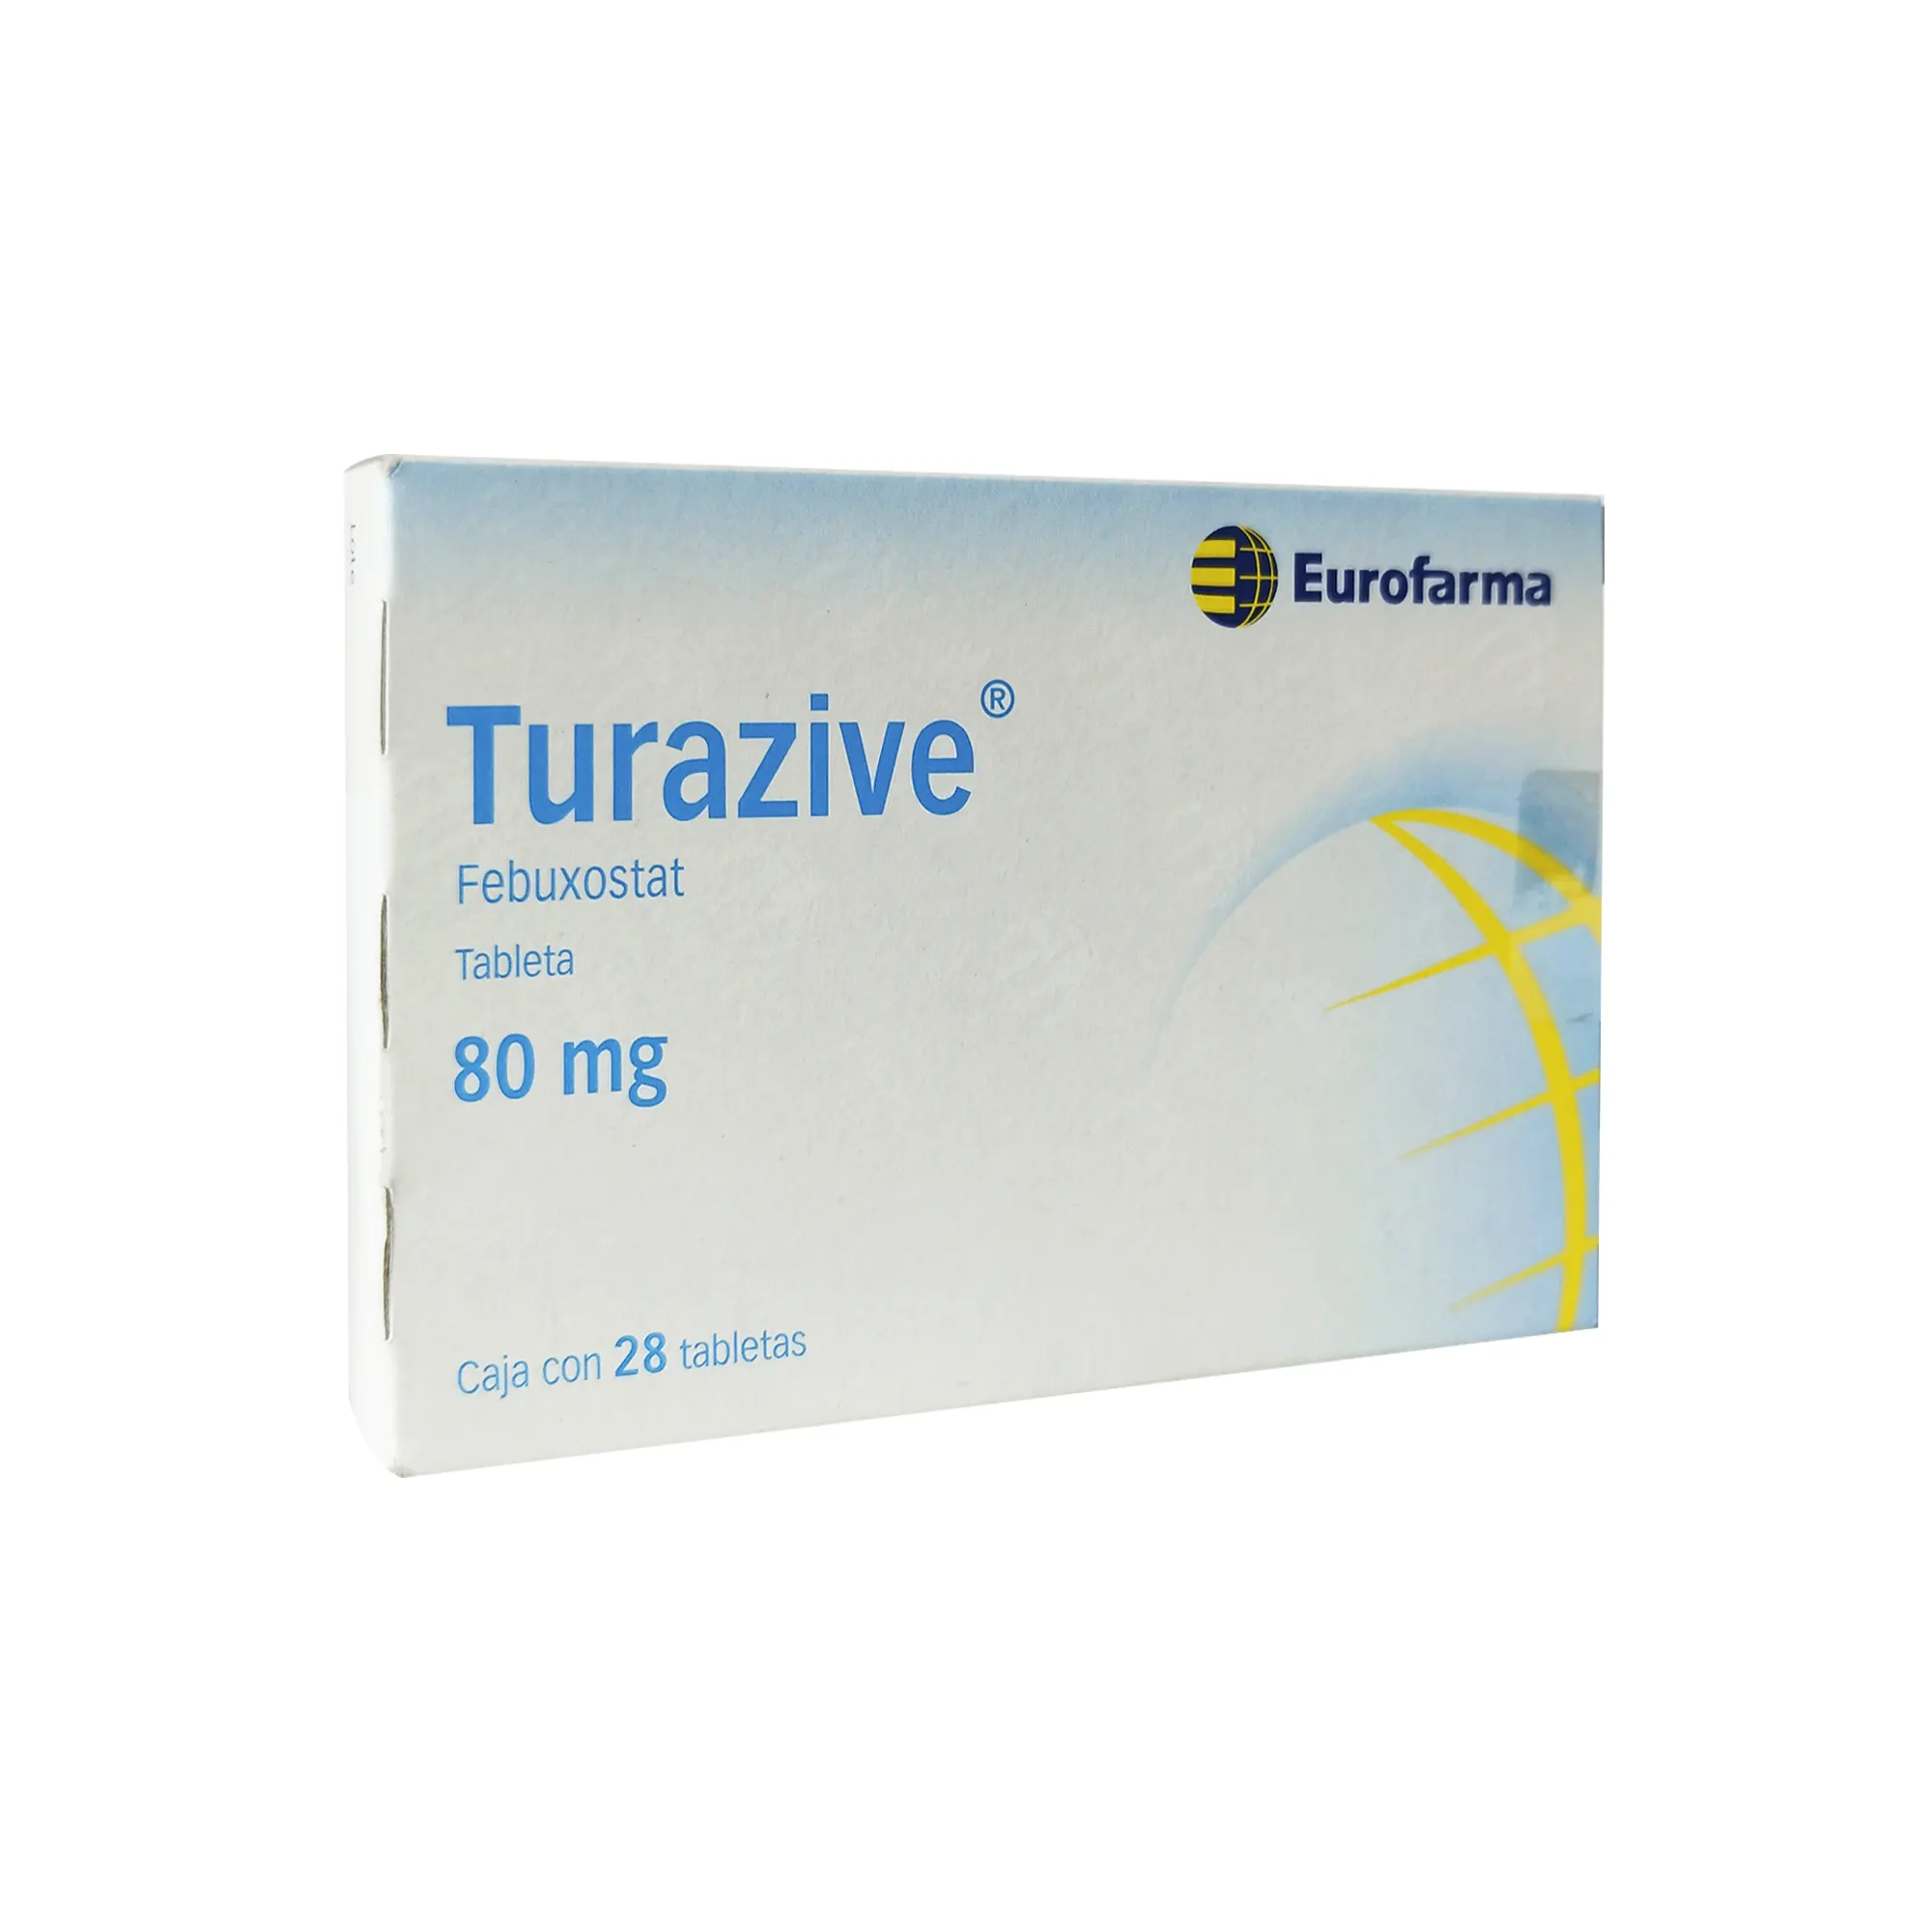 7891317019709 1 turazive febuxostat 80 mg tableta 28 tableta(s)